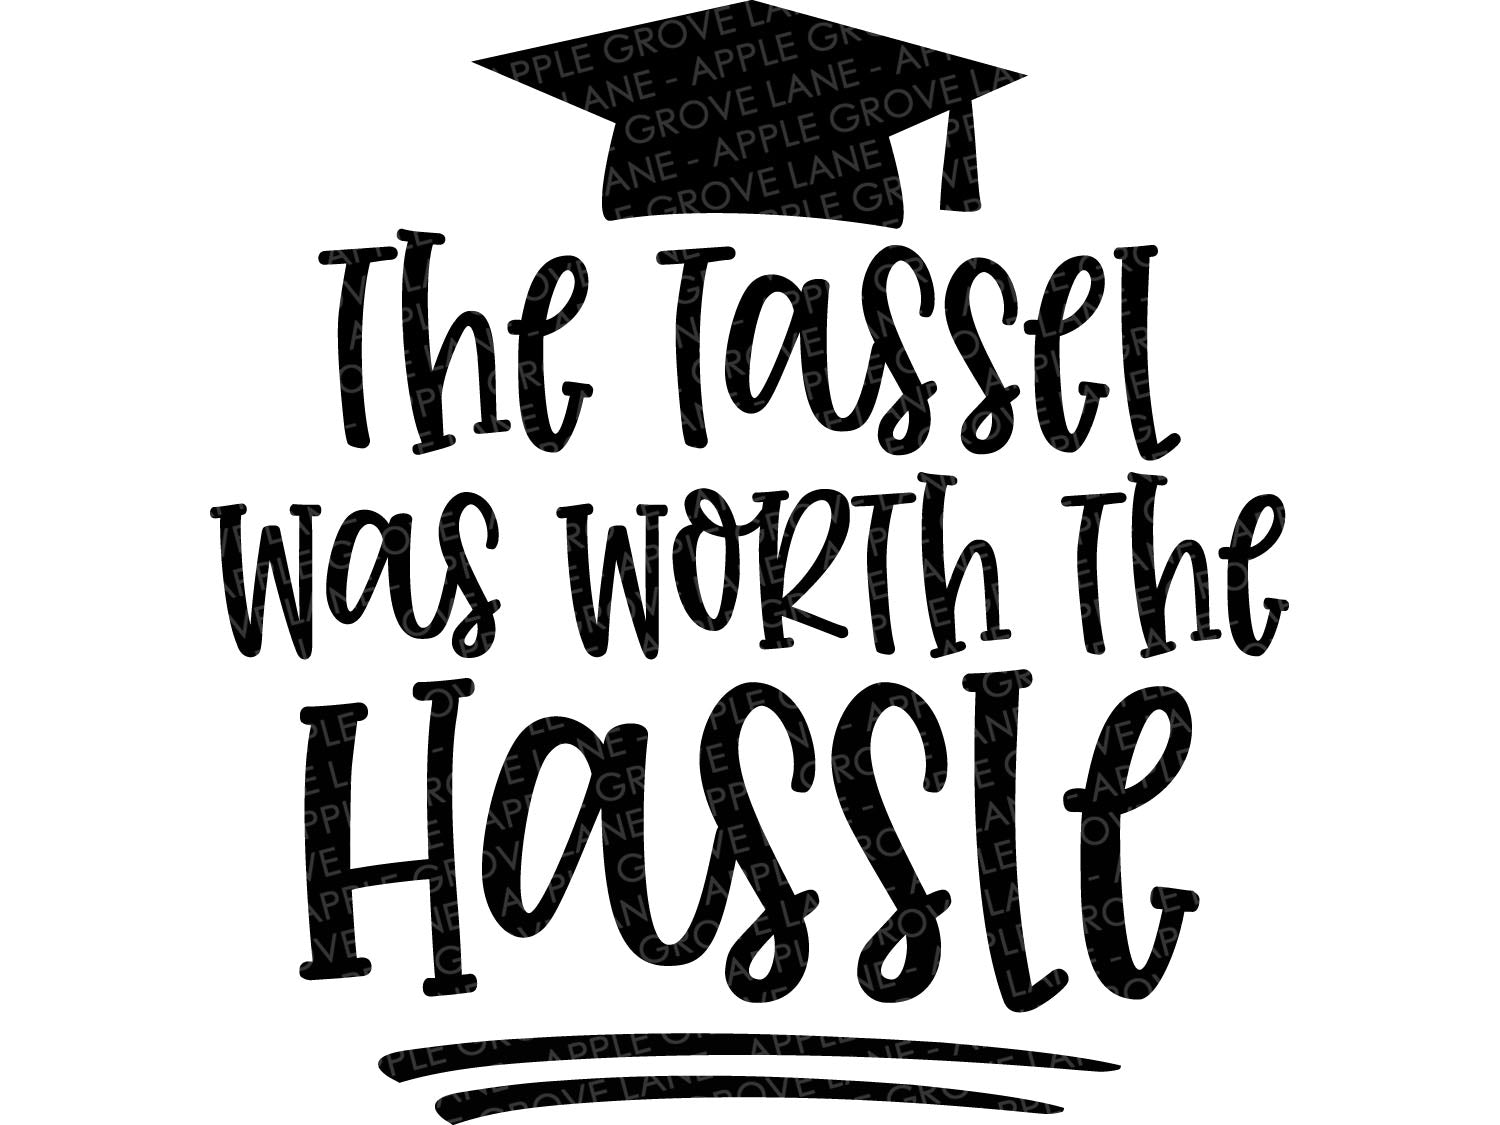 Tassel Worth Hassle Svg Class Of 2021 Svg Graduation Svg 2021 Sv Apple Grove Lane